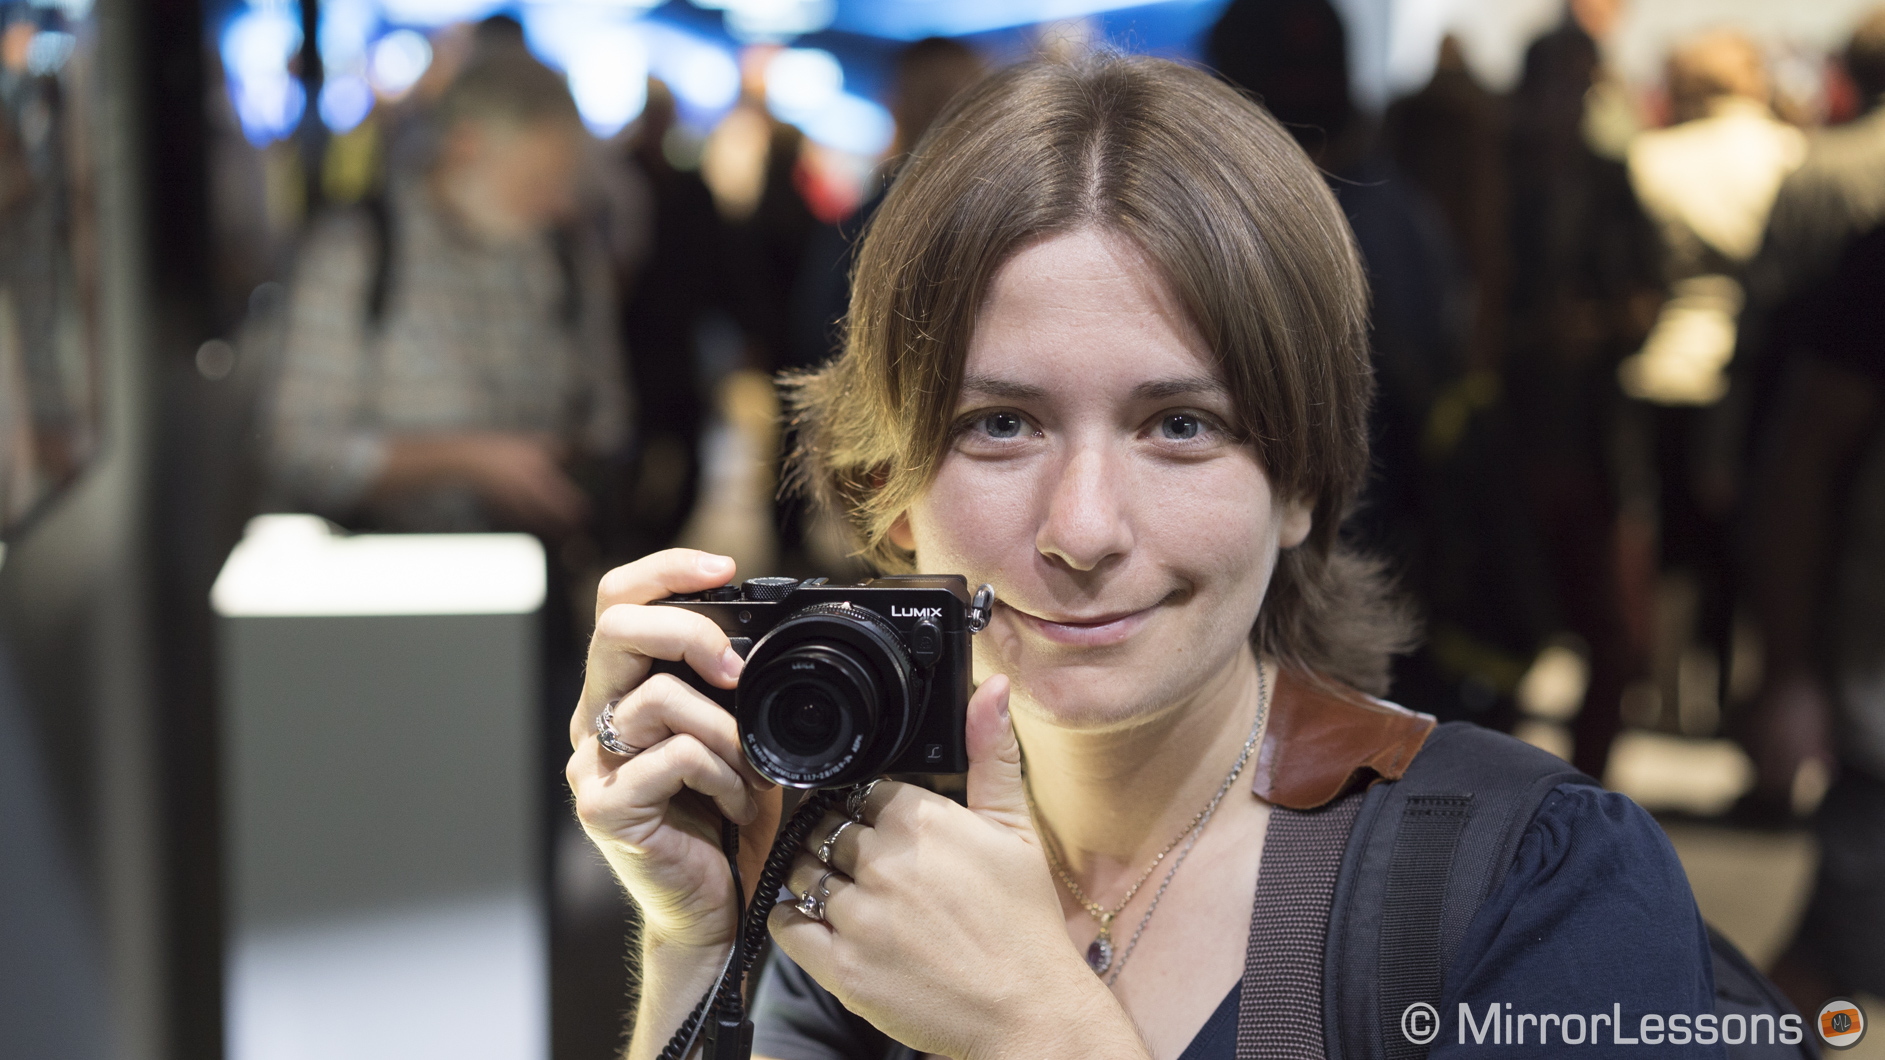 Leica D-Lux 3 Looks Curiously Familiar